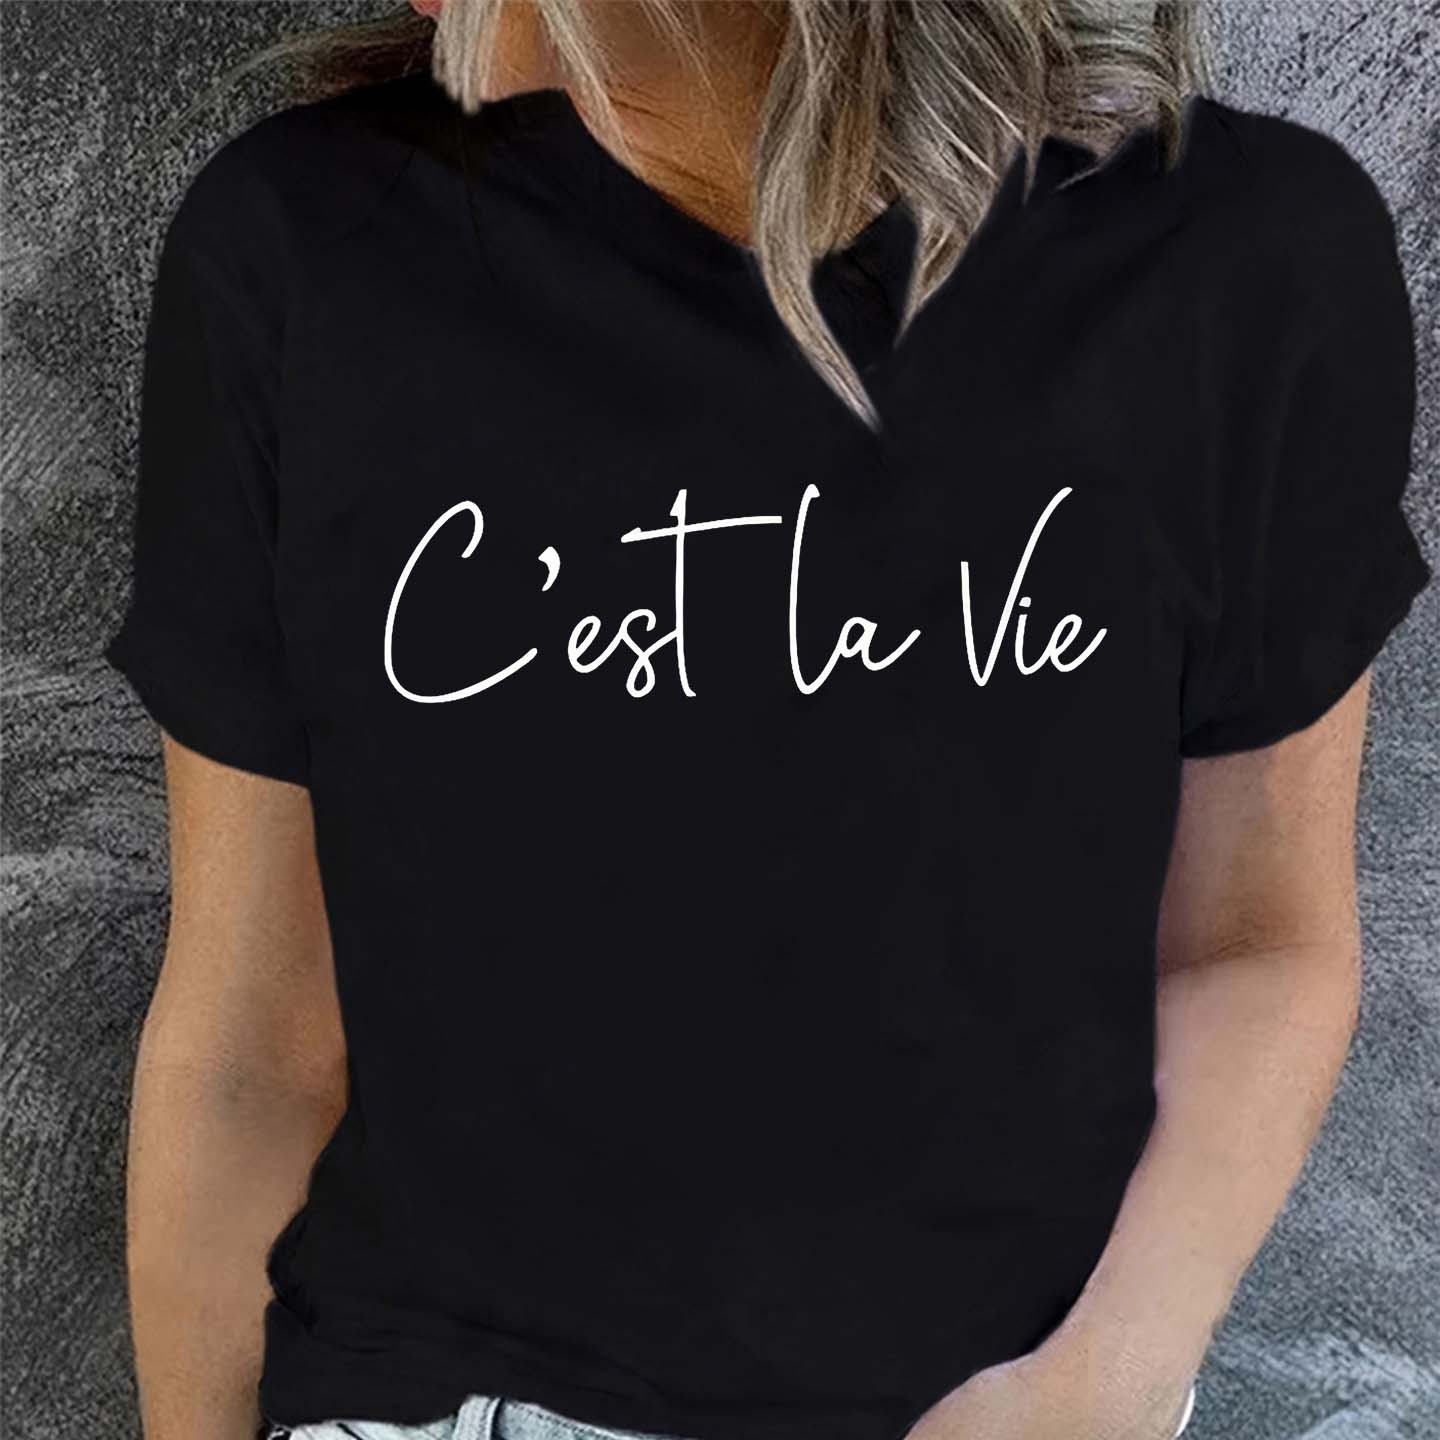 

C'est La Vie Letter Print Short Sleeve T-shirt, Crew Neck Casual Top For Summer & Spring, Women's Clothing